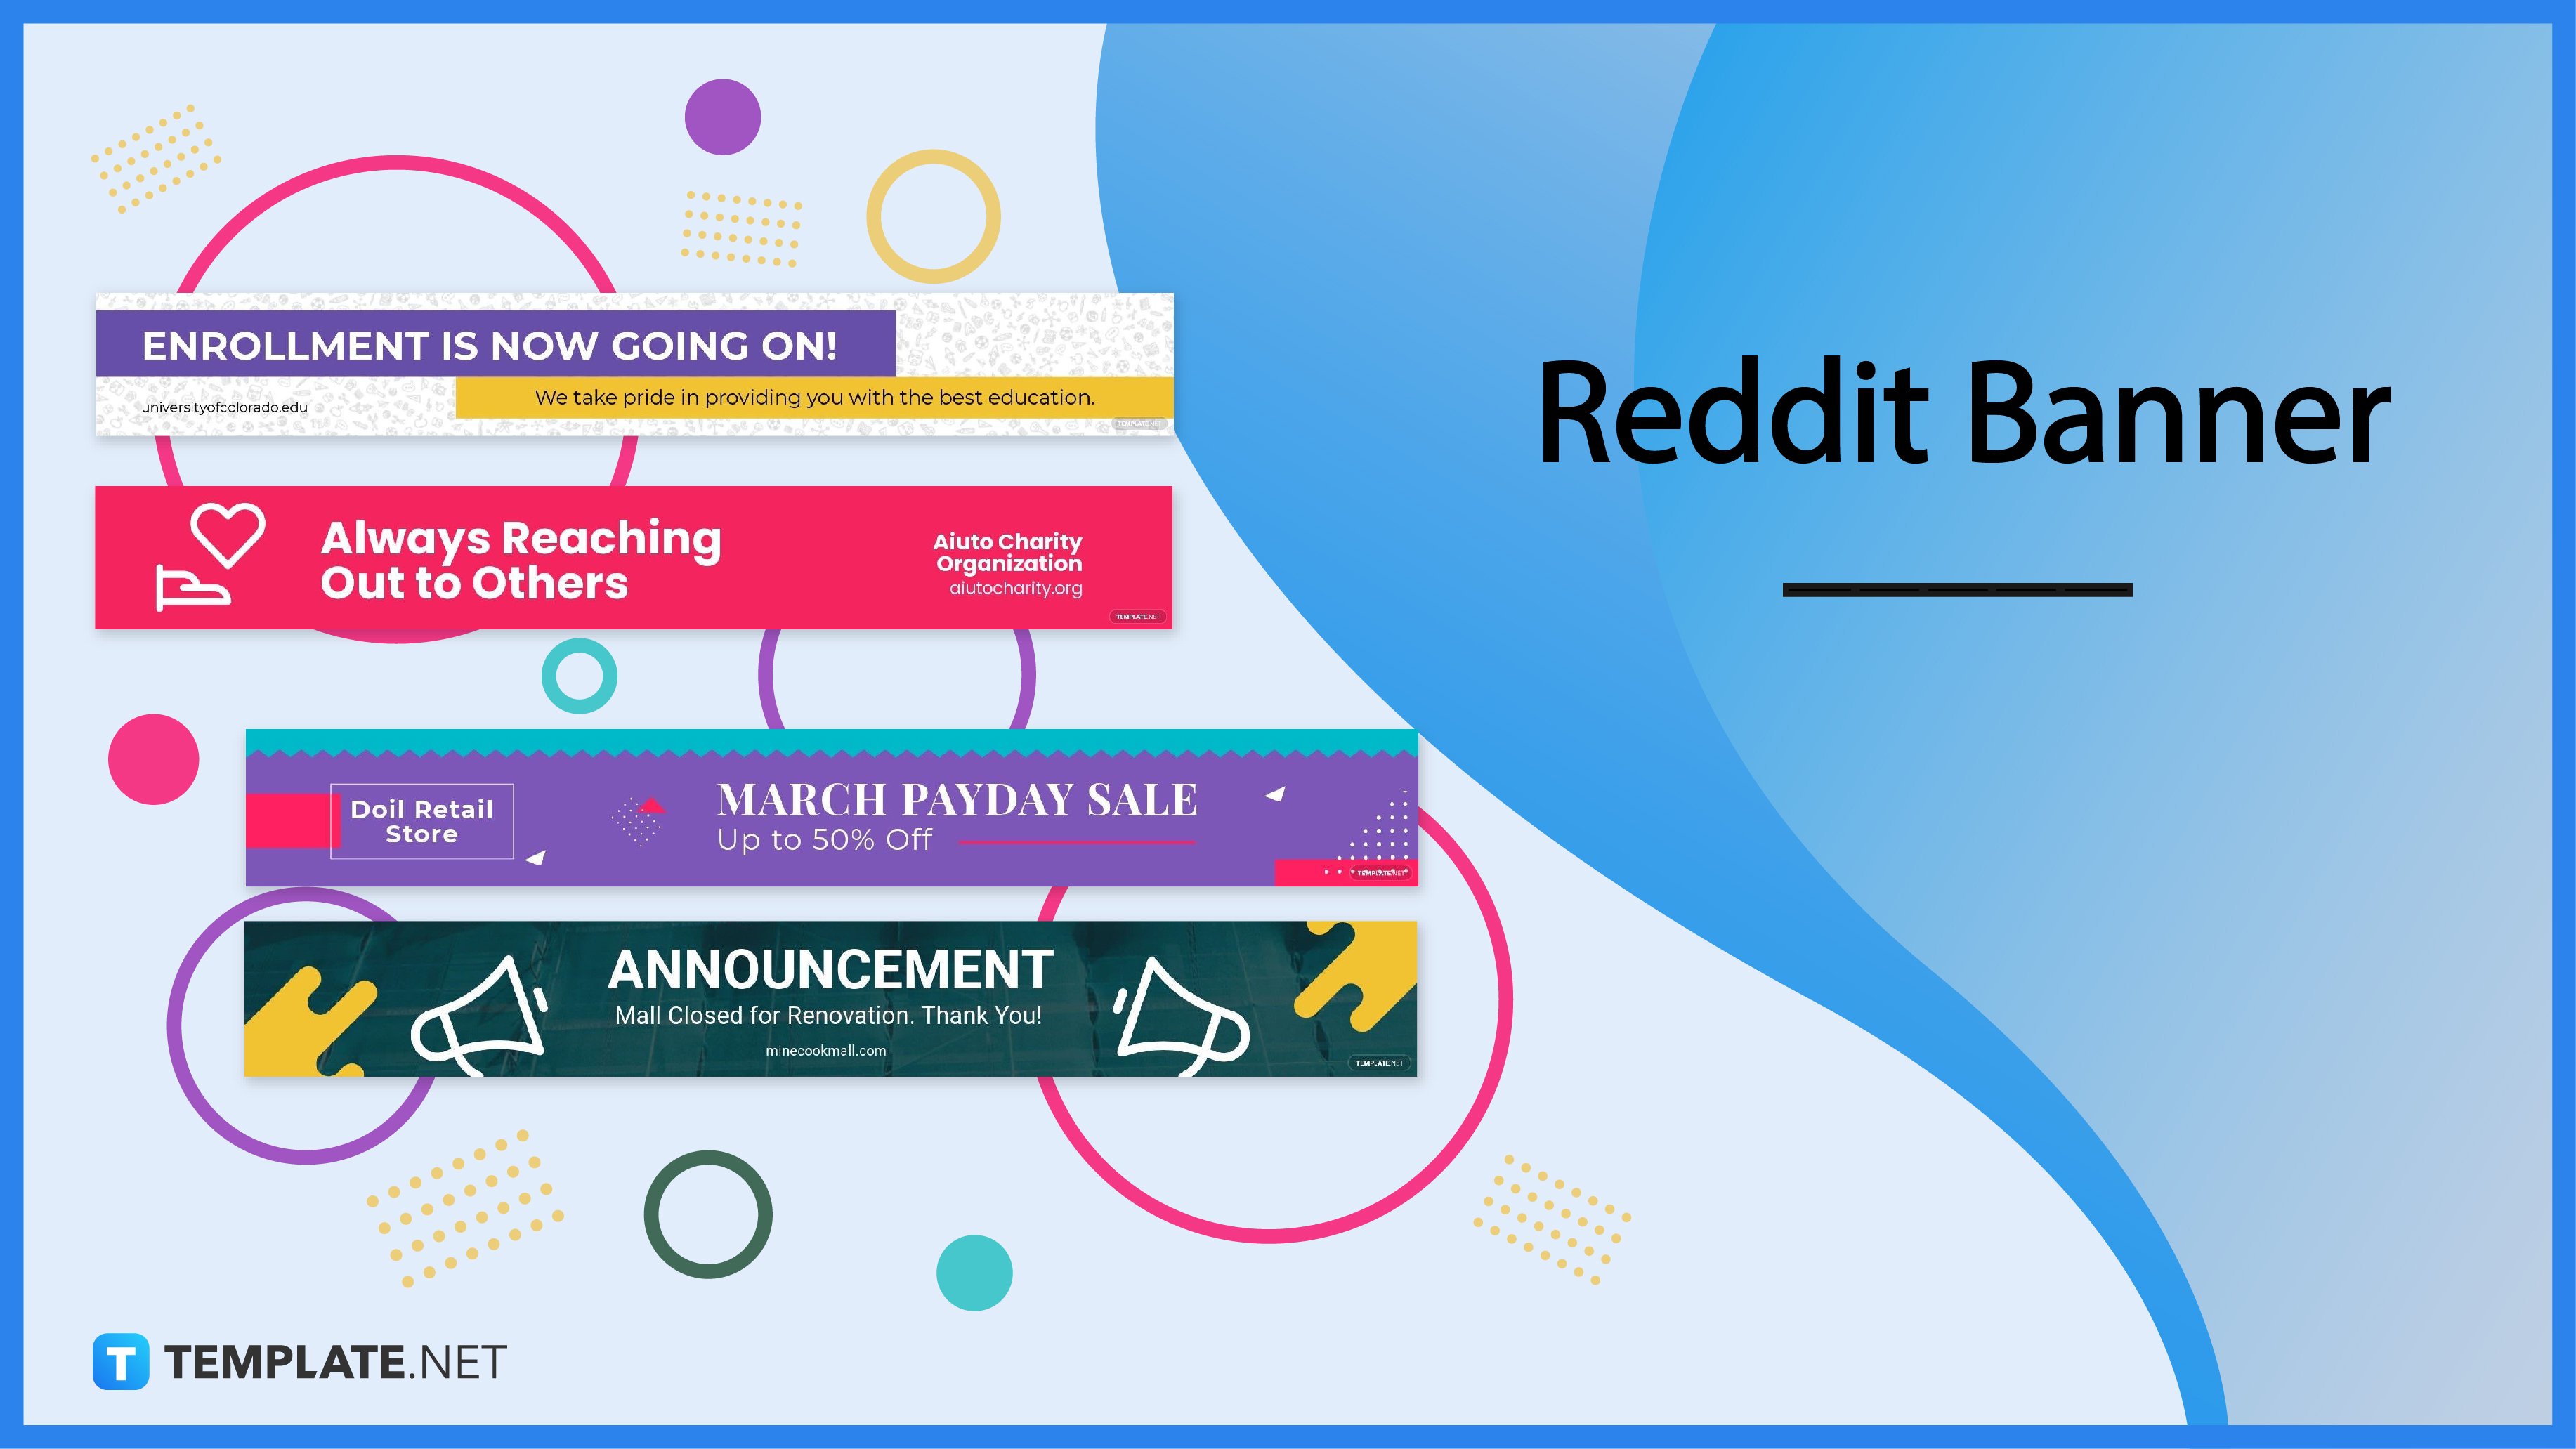 Reddit Banner What Is a Reddit Banner? Definition, Types, Uses